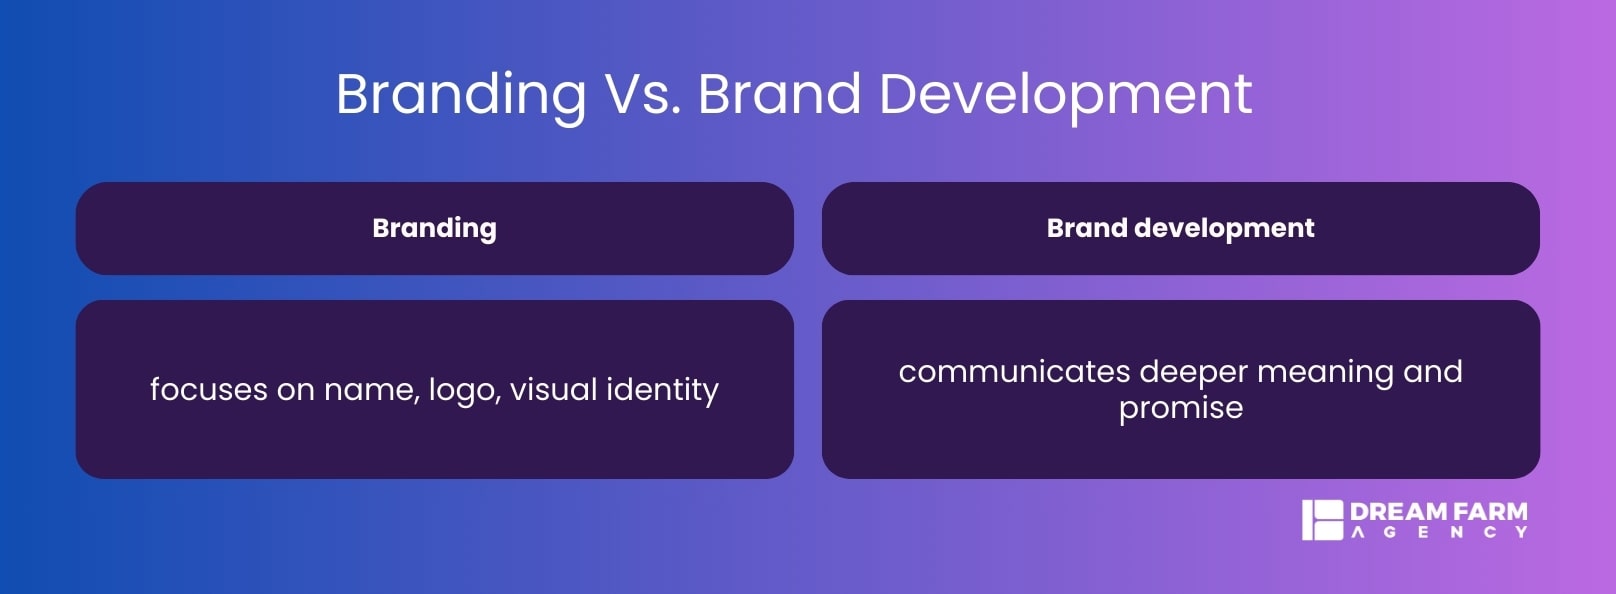 Branding Vs. Brand Development-infographic